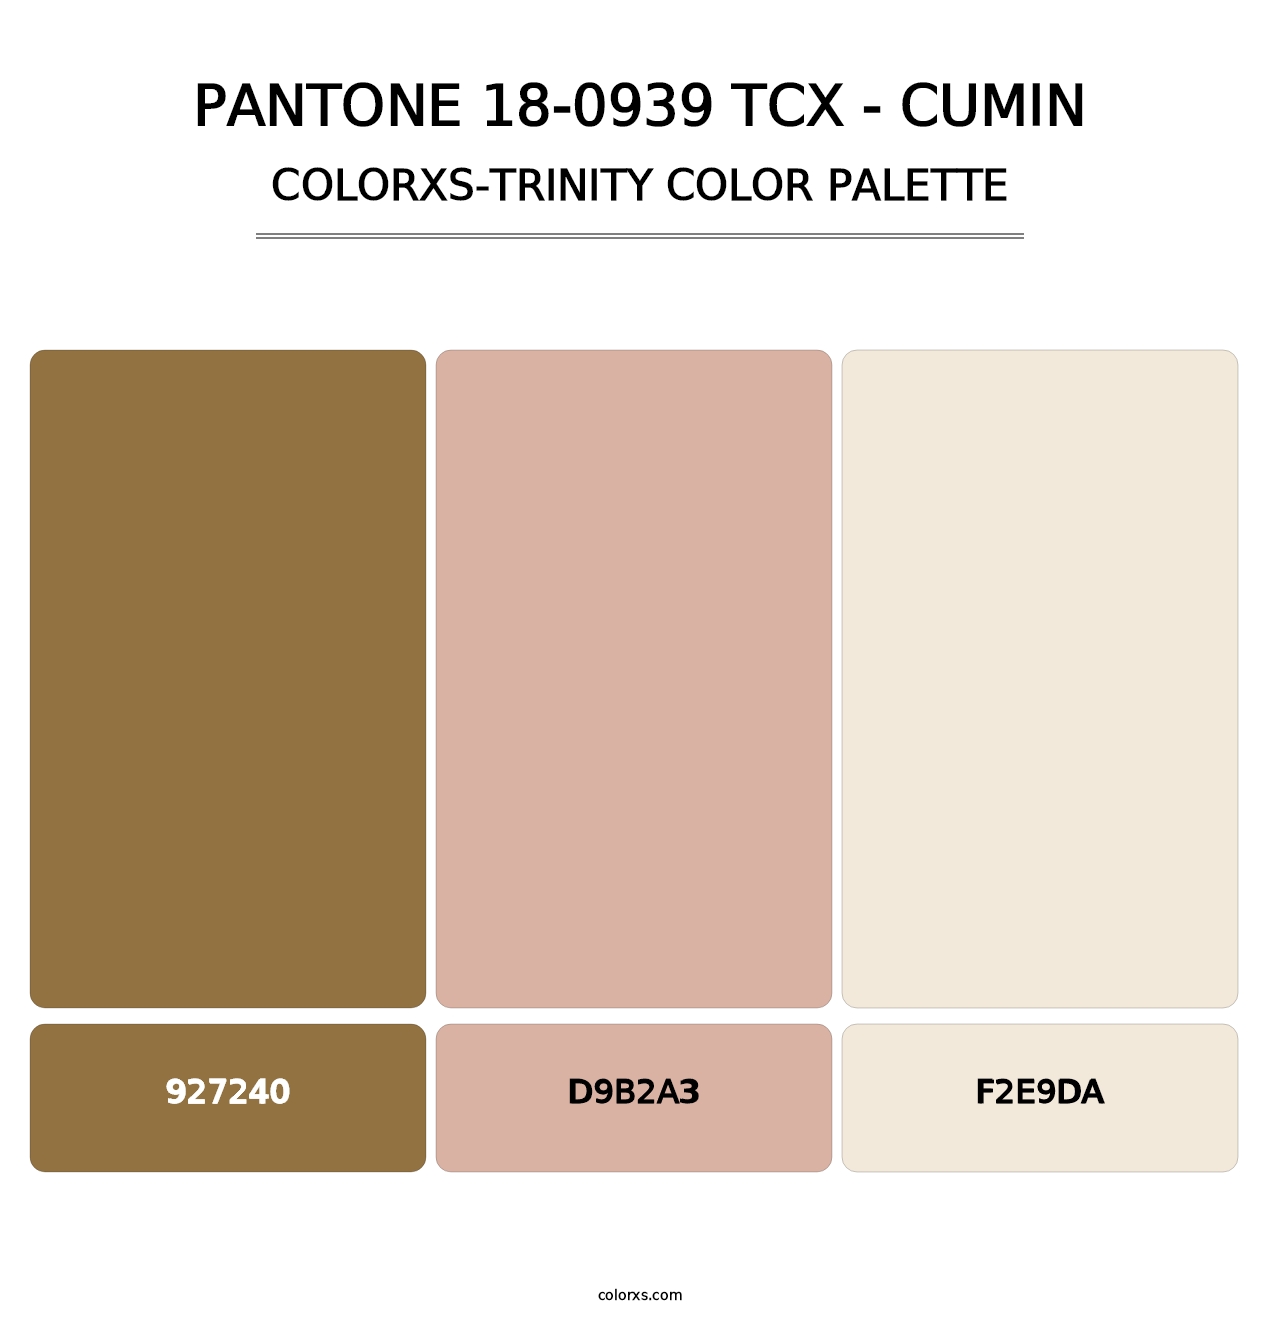 PANTONE 18-0939 TCX - Cumin - Colorxs Trinity Palette